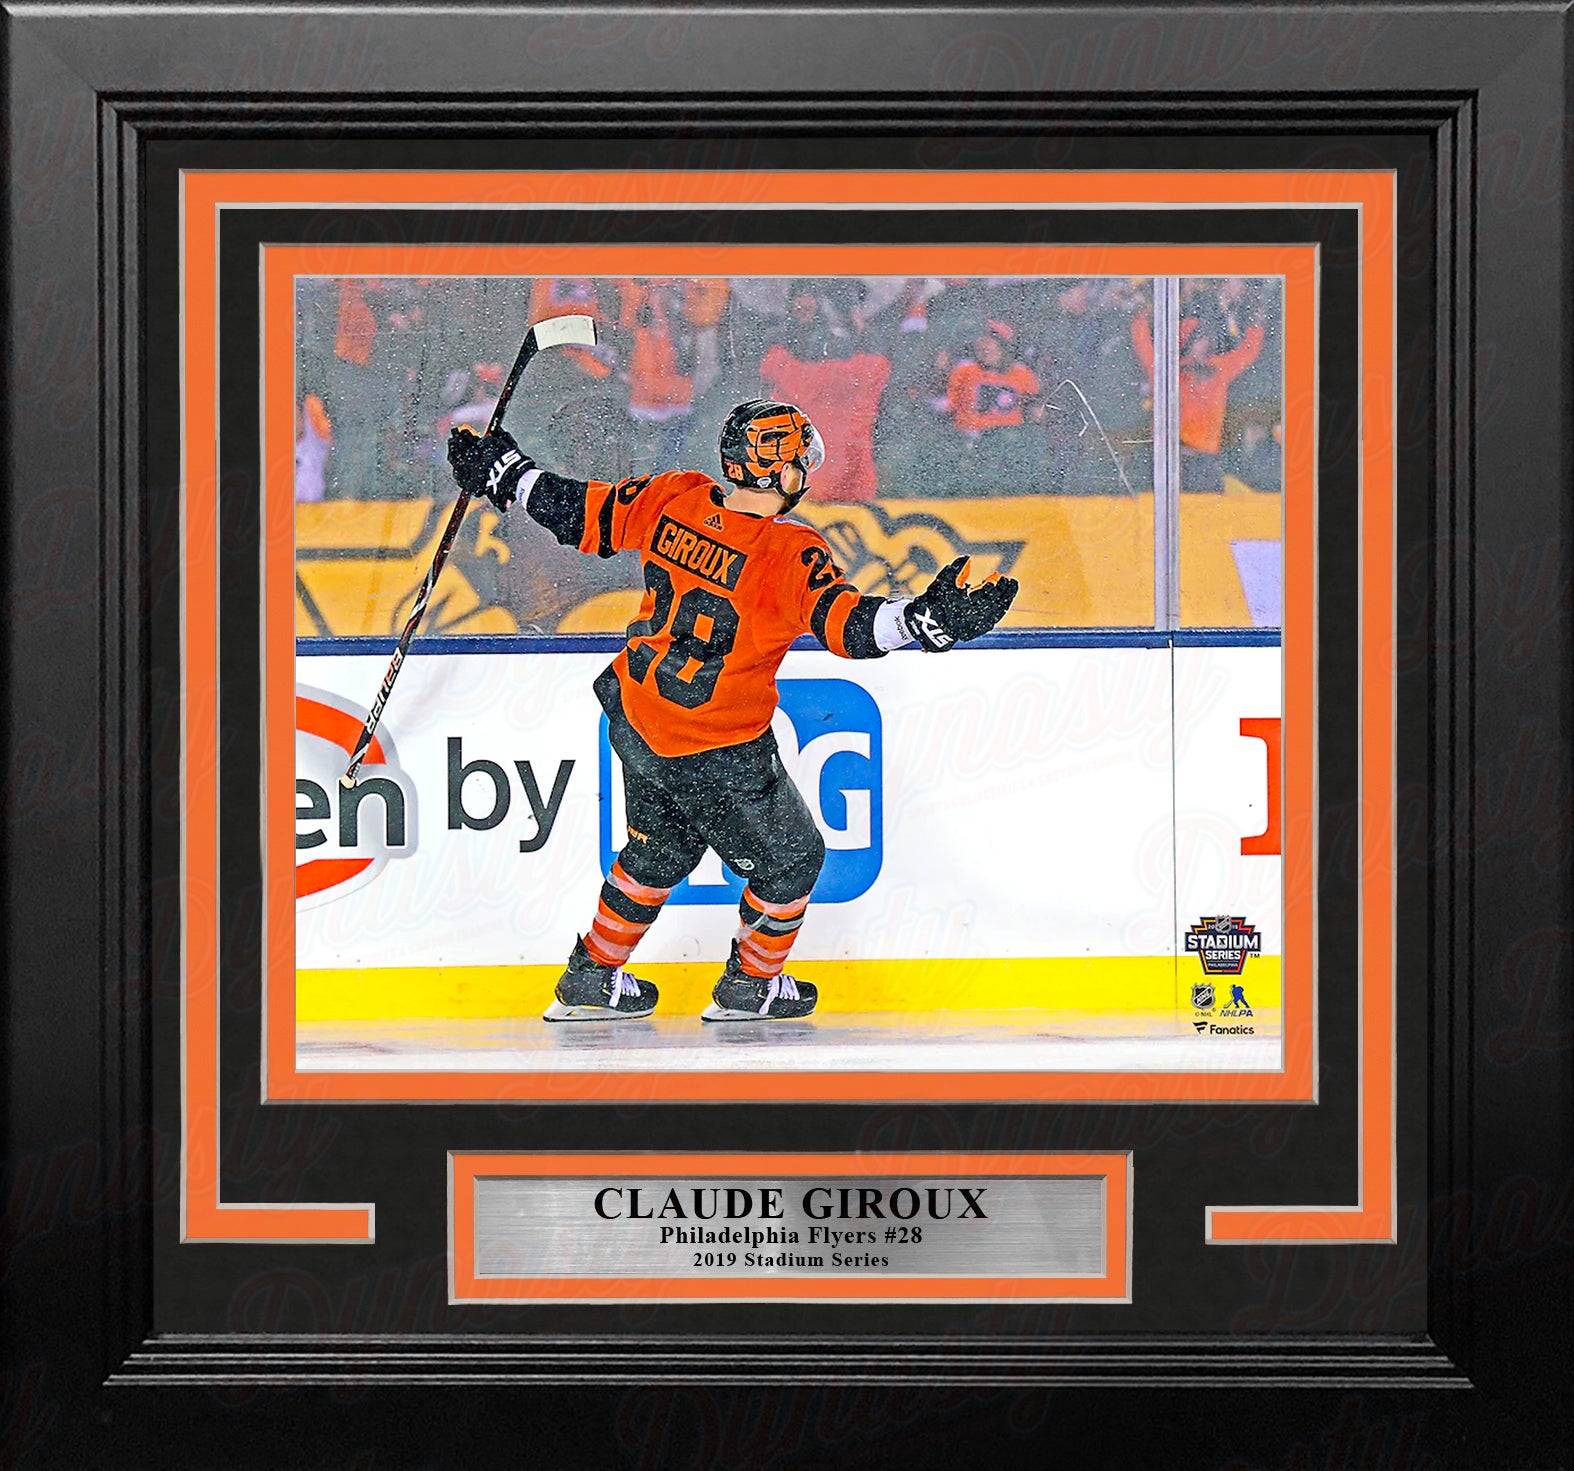 Claude Giroux 2019 Stadium Series Philadelphia Flyers 8" x 10" Framed Hockey Photo - Dynasty Sports & Framing 